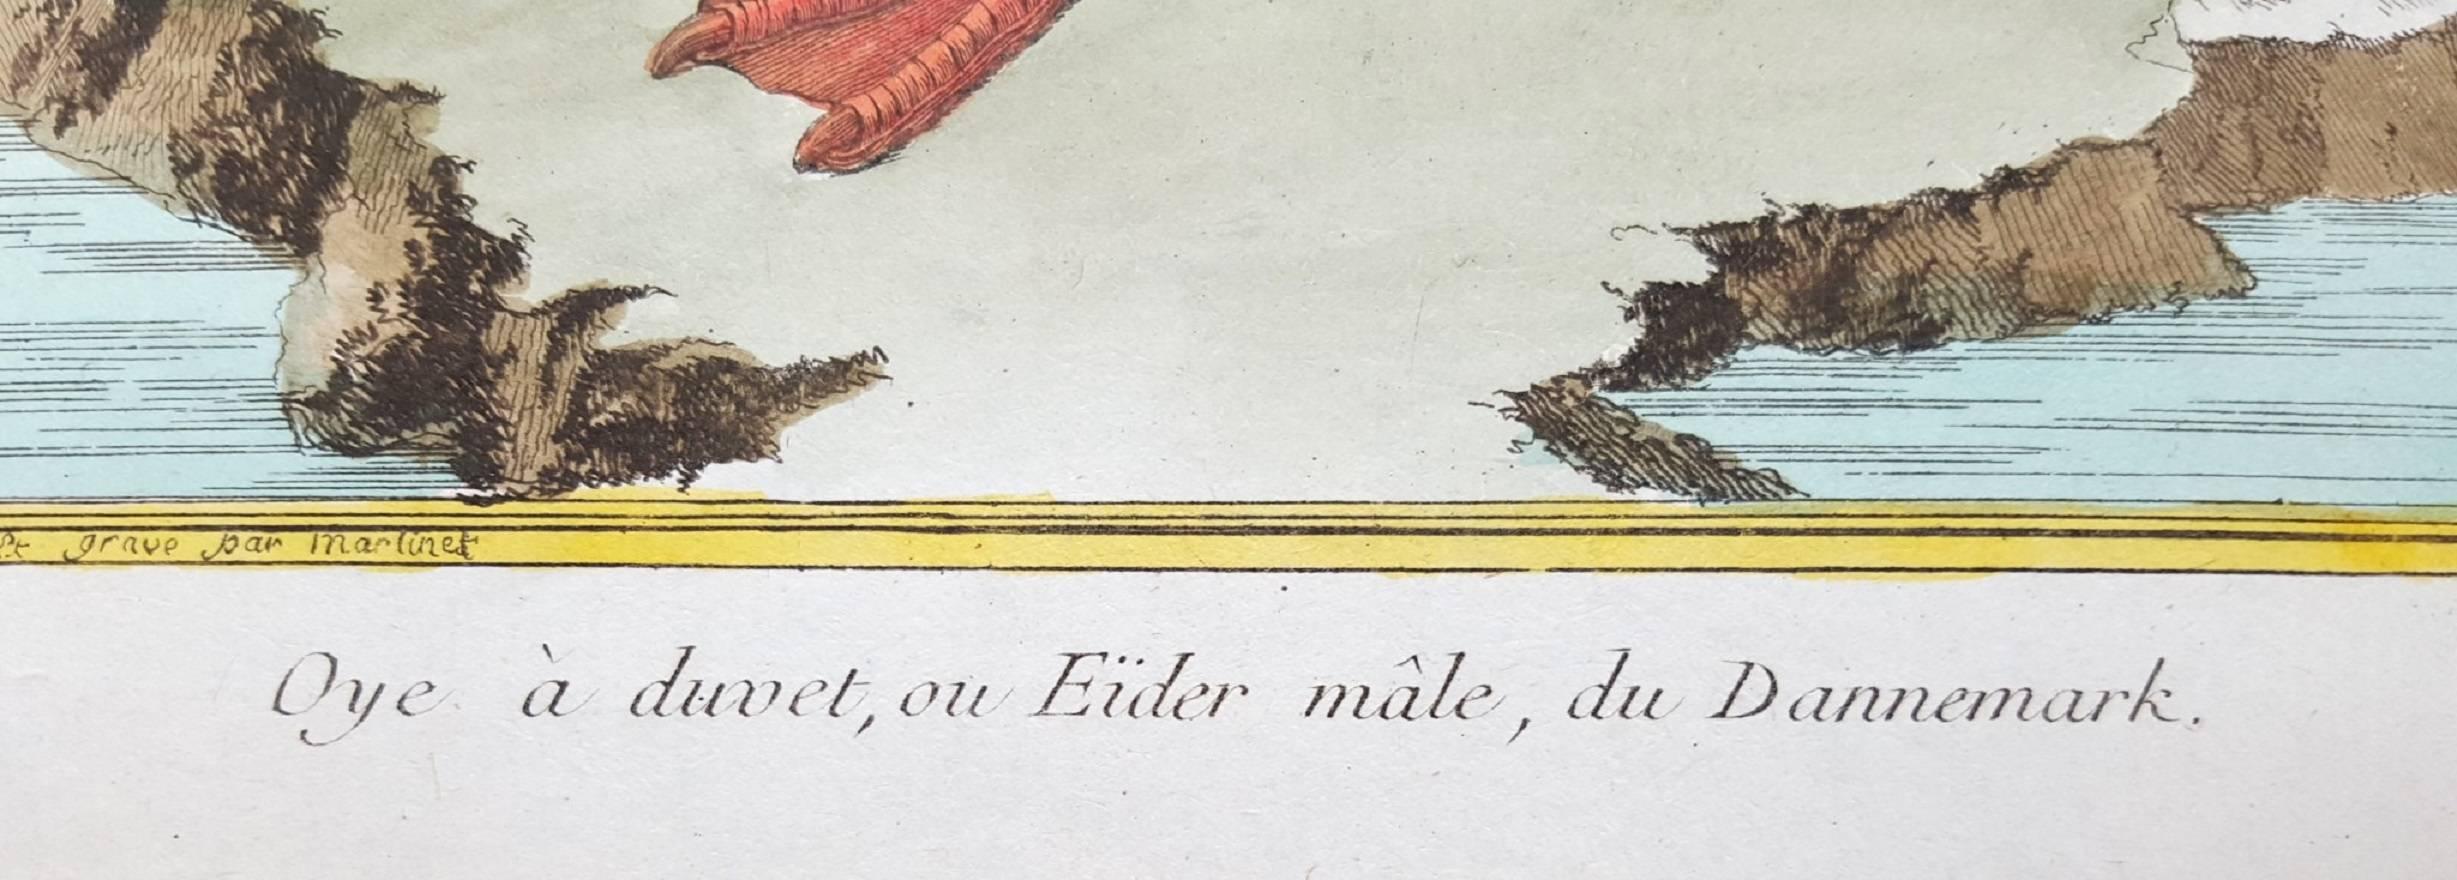 Oye a Duvet oe Eider male, du Dannemark - Beige Animal Print by Francois Nicolas Martinet